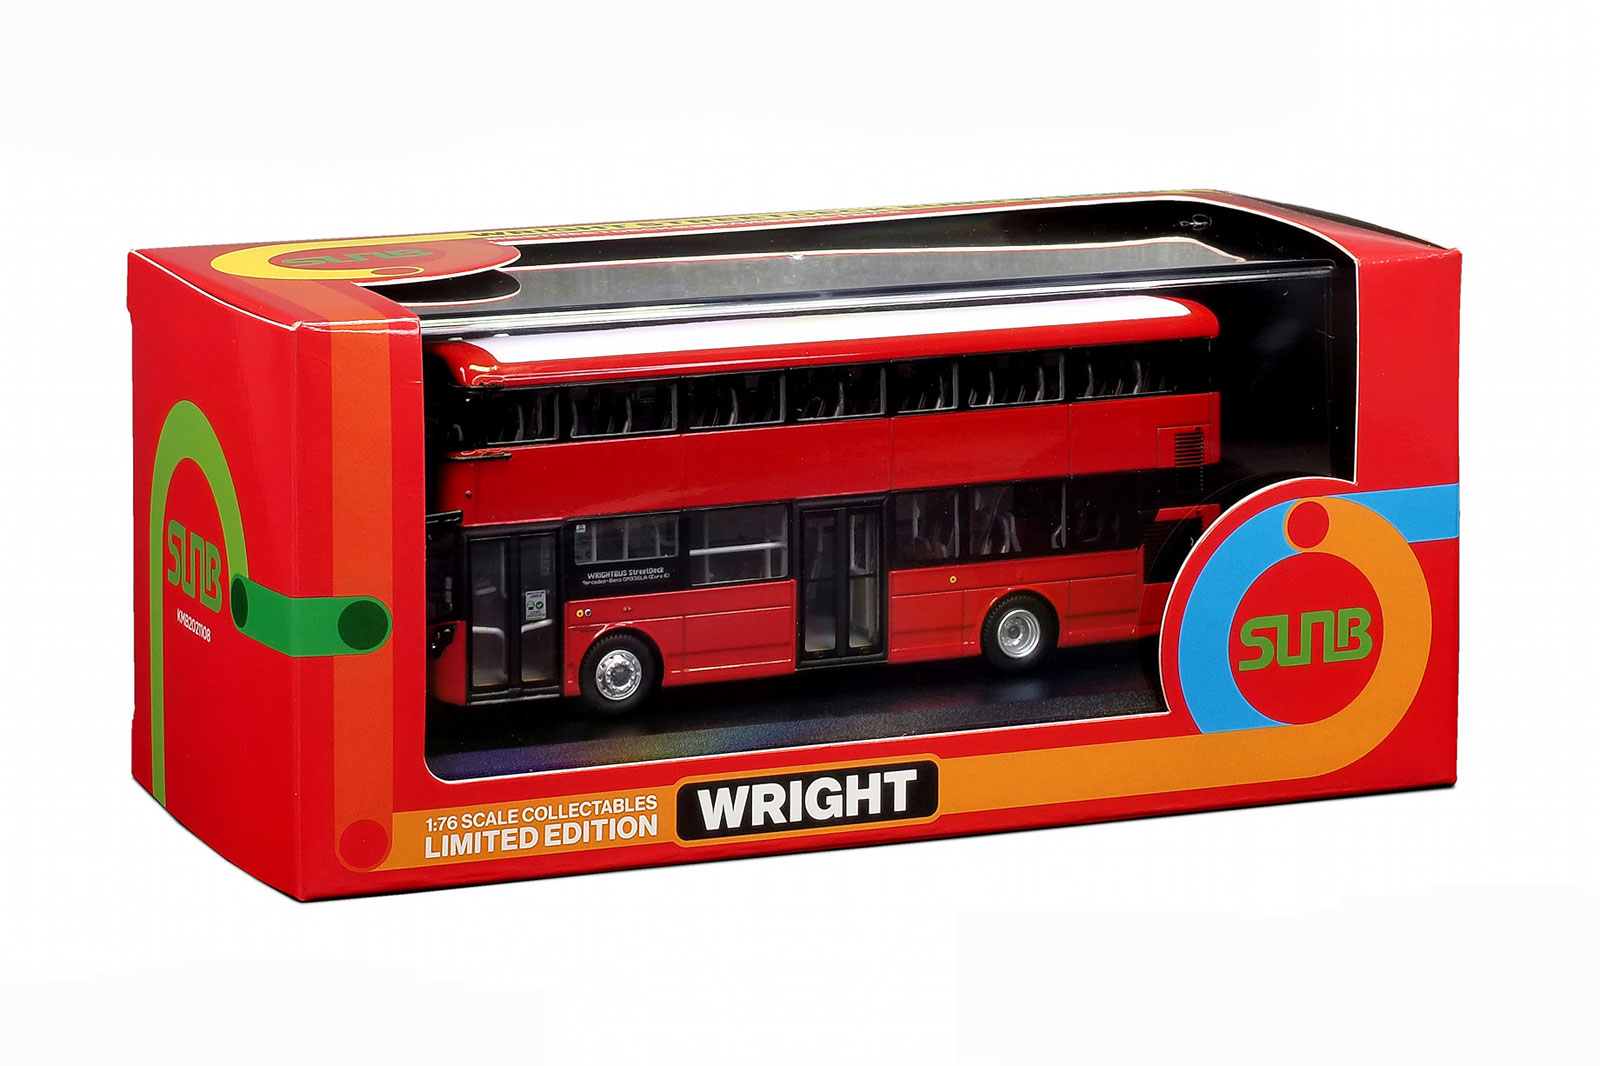 KMB2021108 - Wright StreetDeck - Sun Bus produced by 80M Bus Model